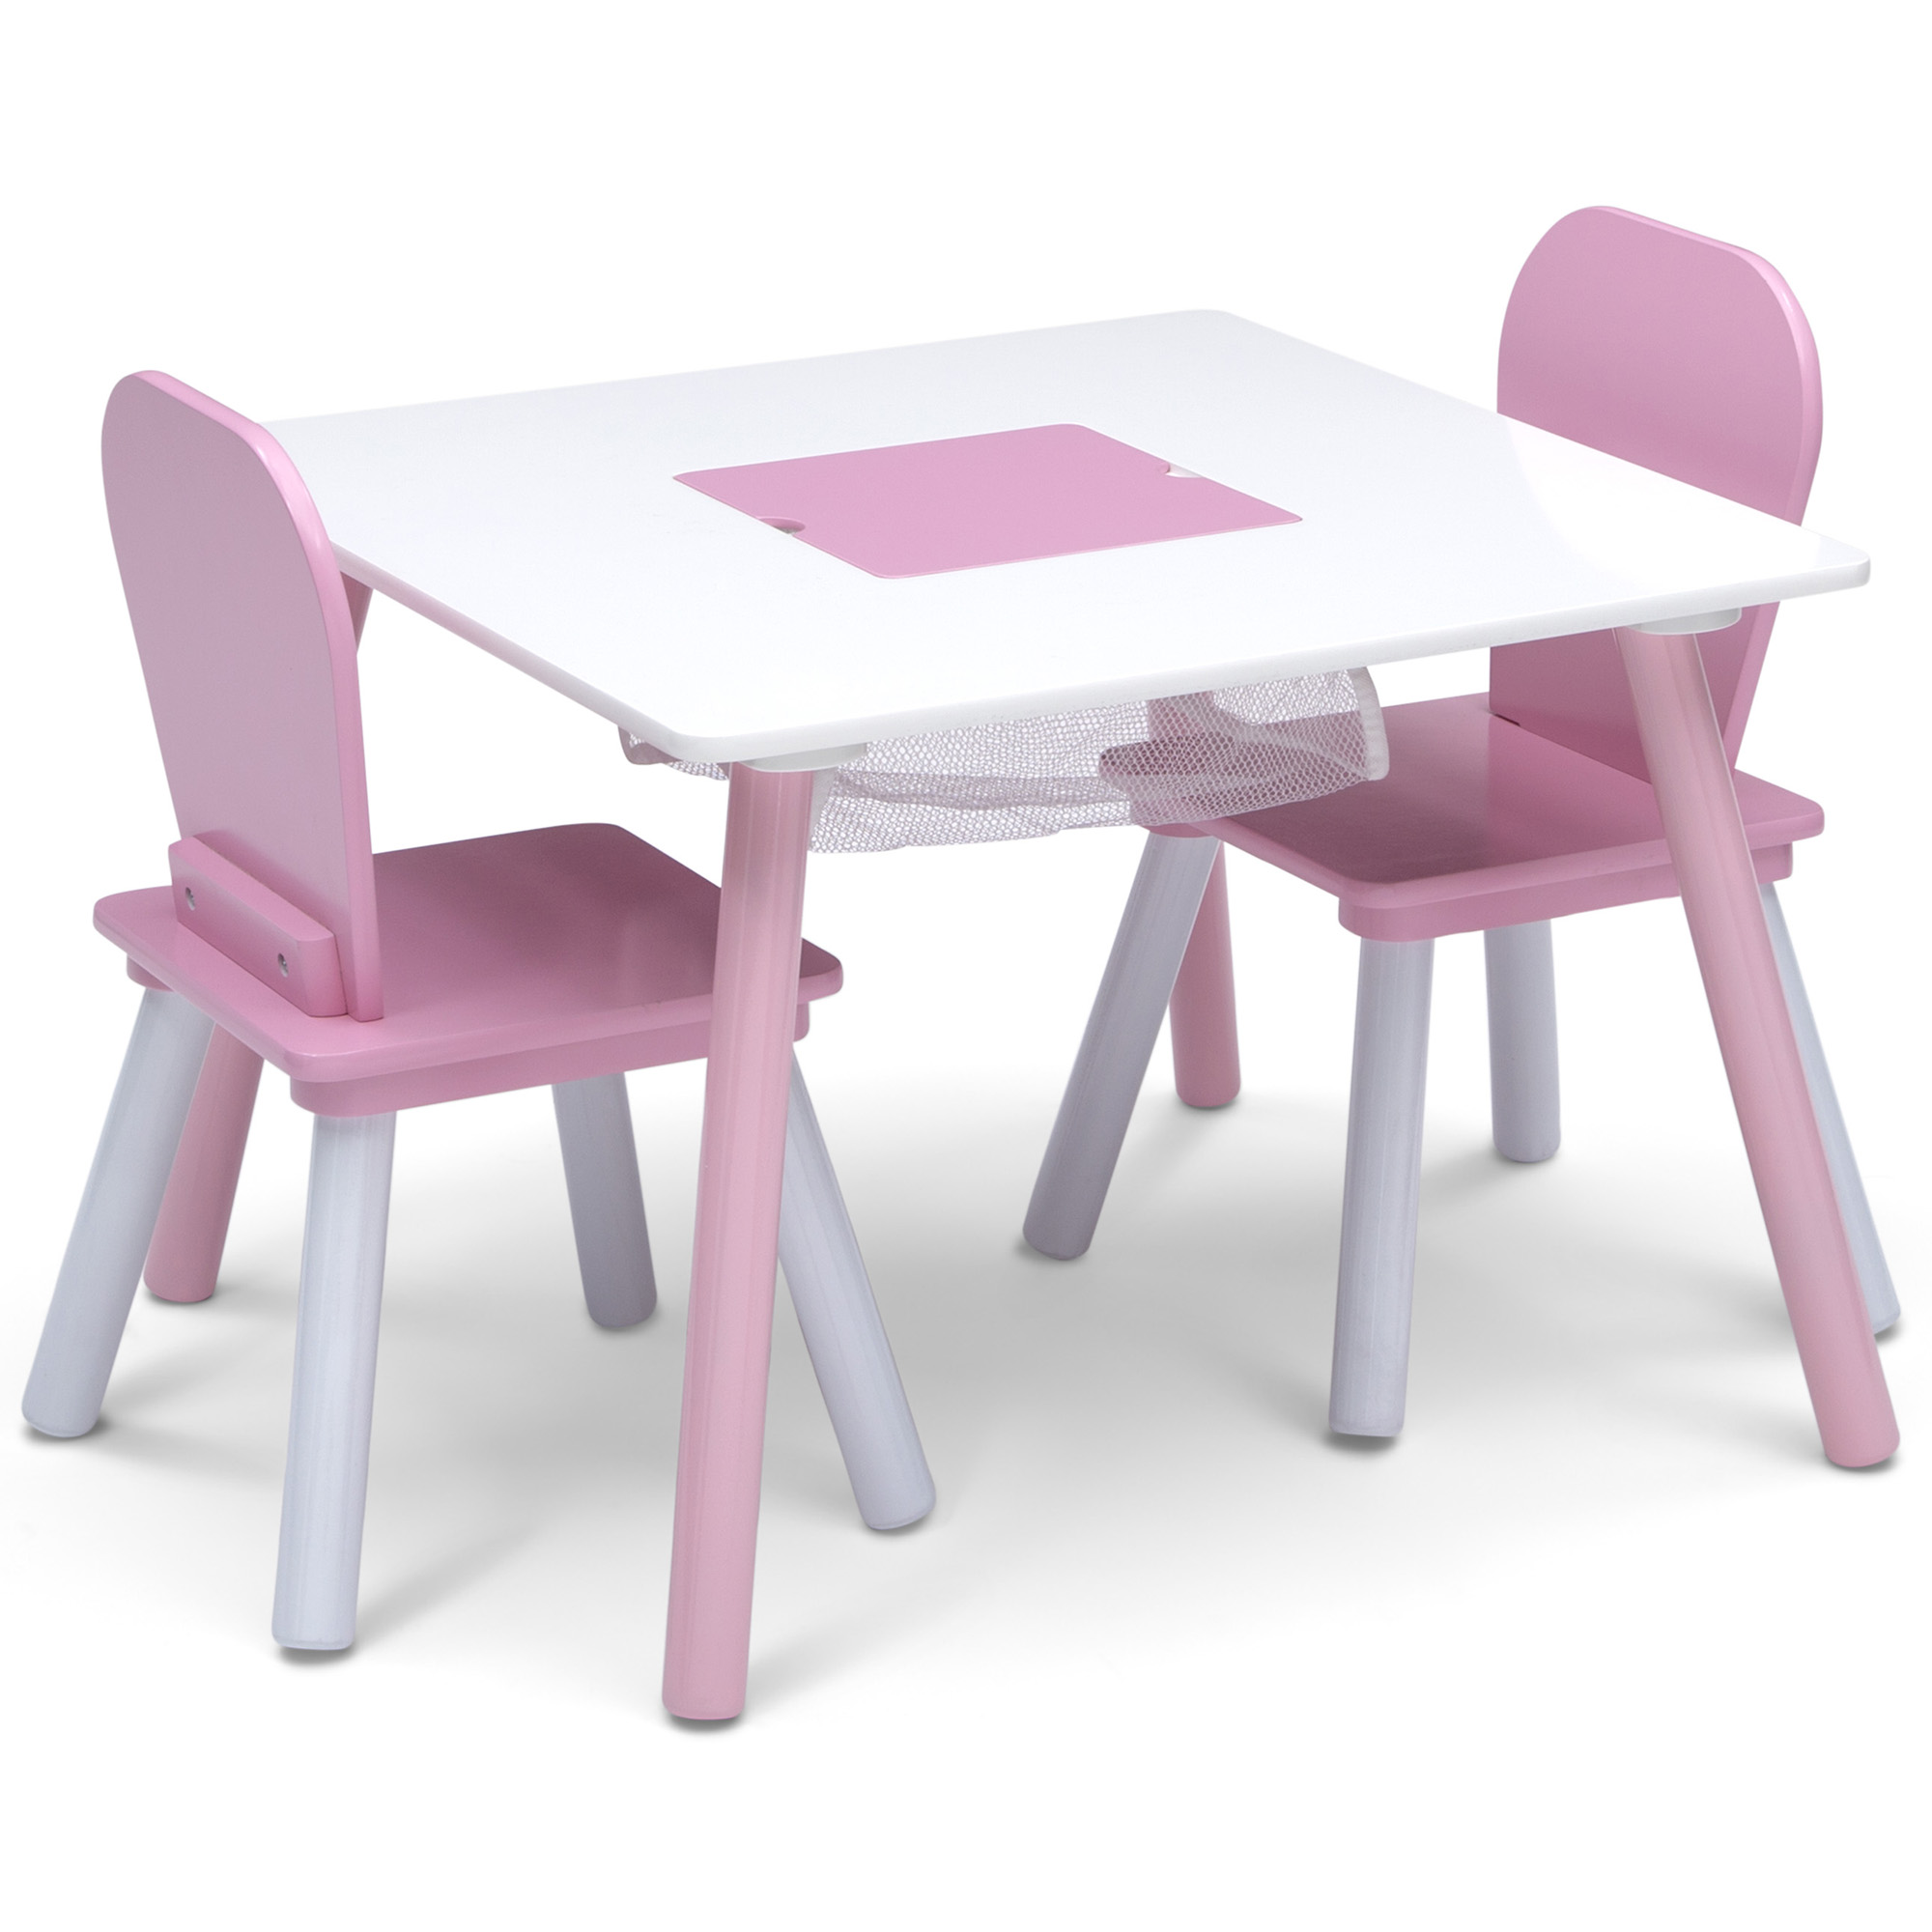 Delta Children 4-Piece Toddler Playroom Set, Pink/White - image 4 of 11